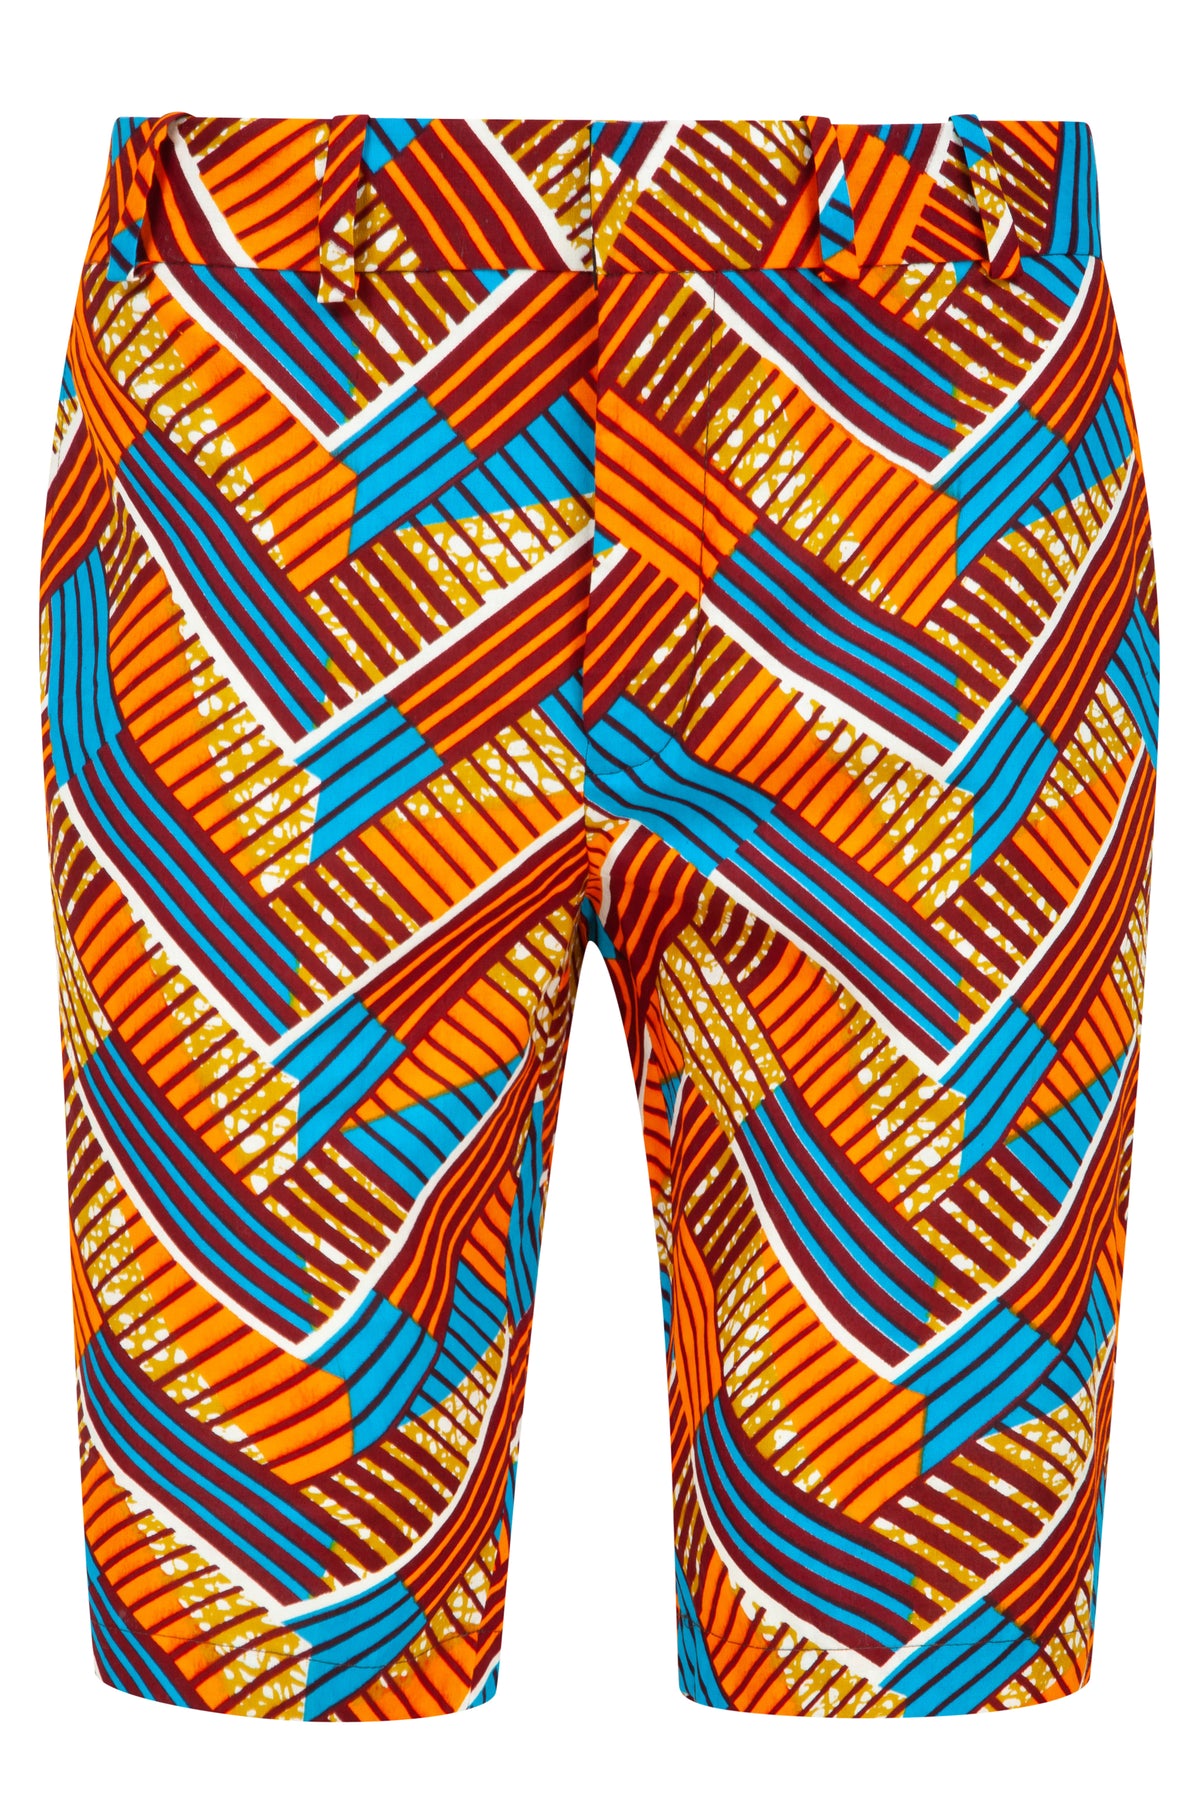 Men's African print shorts Ohema Ohene